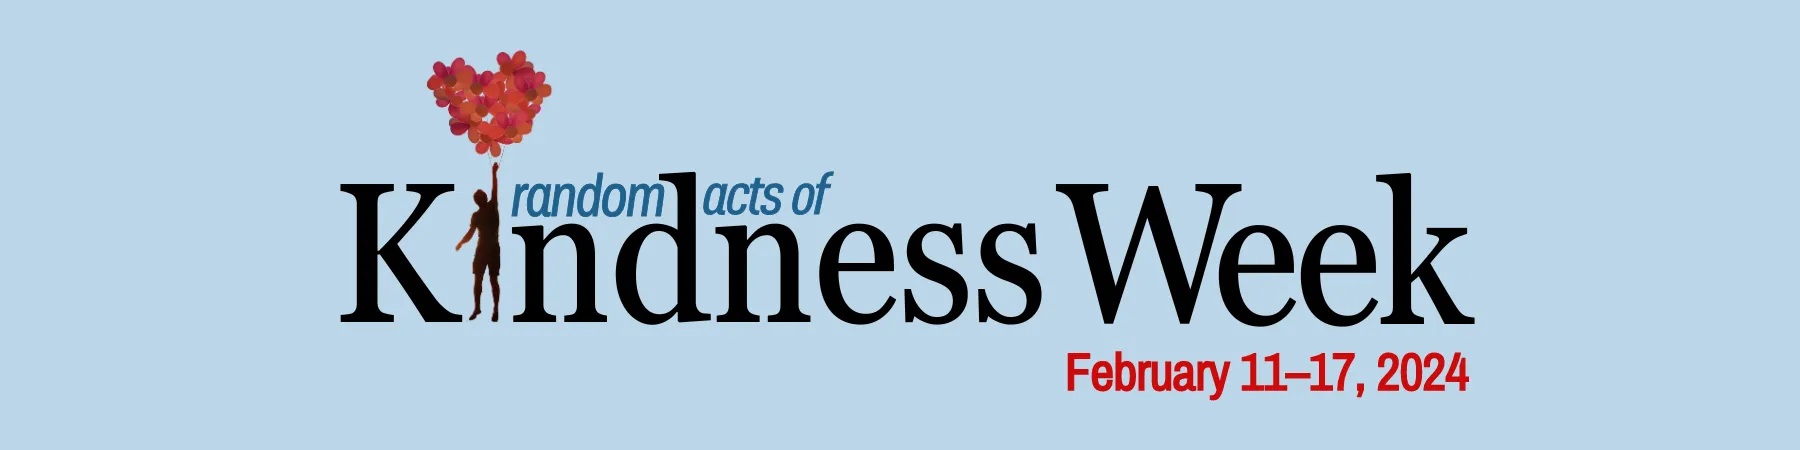 Random Acts of Kindness Week, February 11-17